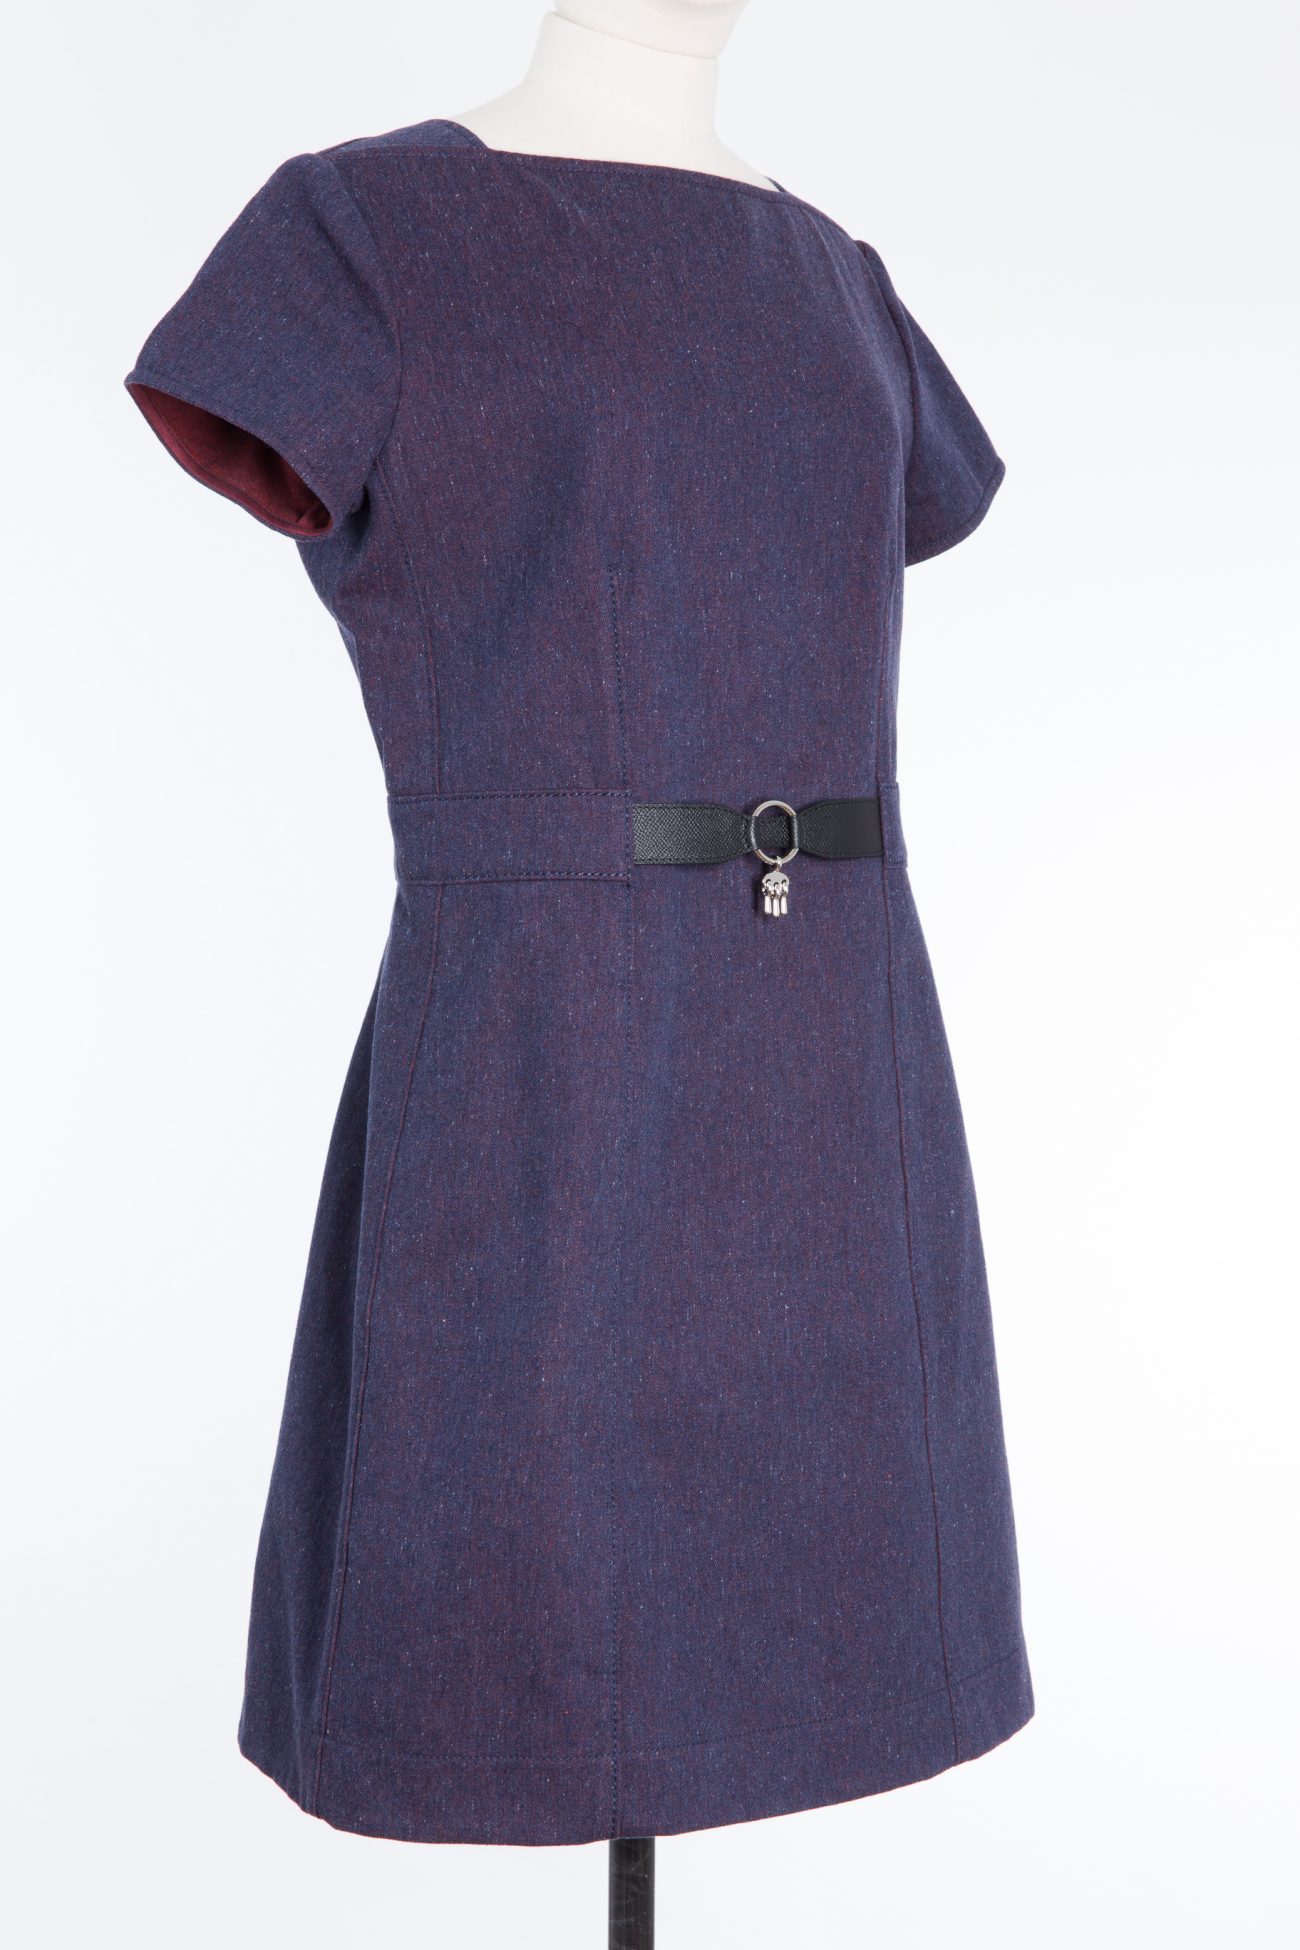 Hermes Dress, FR38 - Huntessa Luxury Online Consignment Boutique